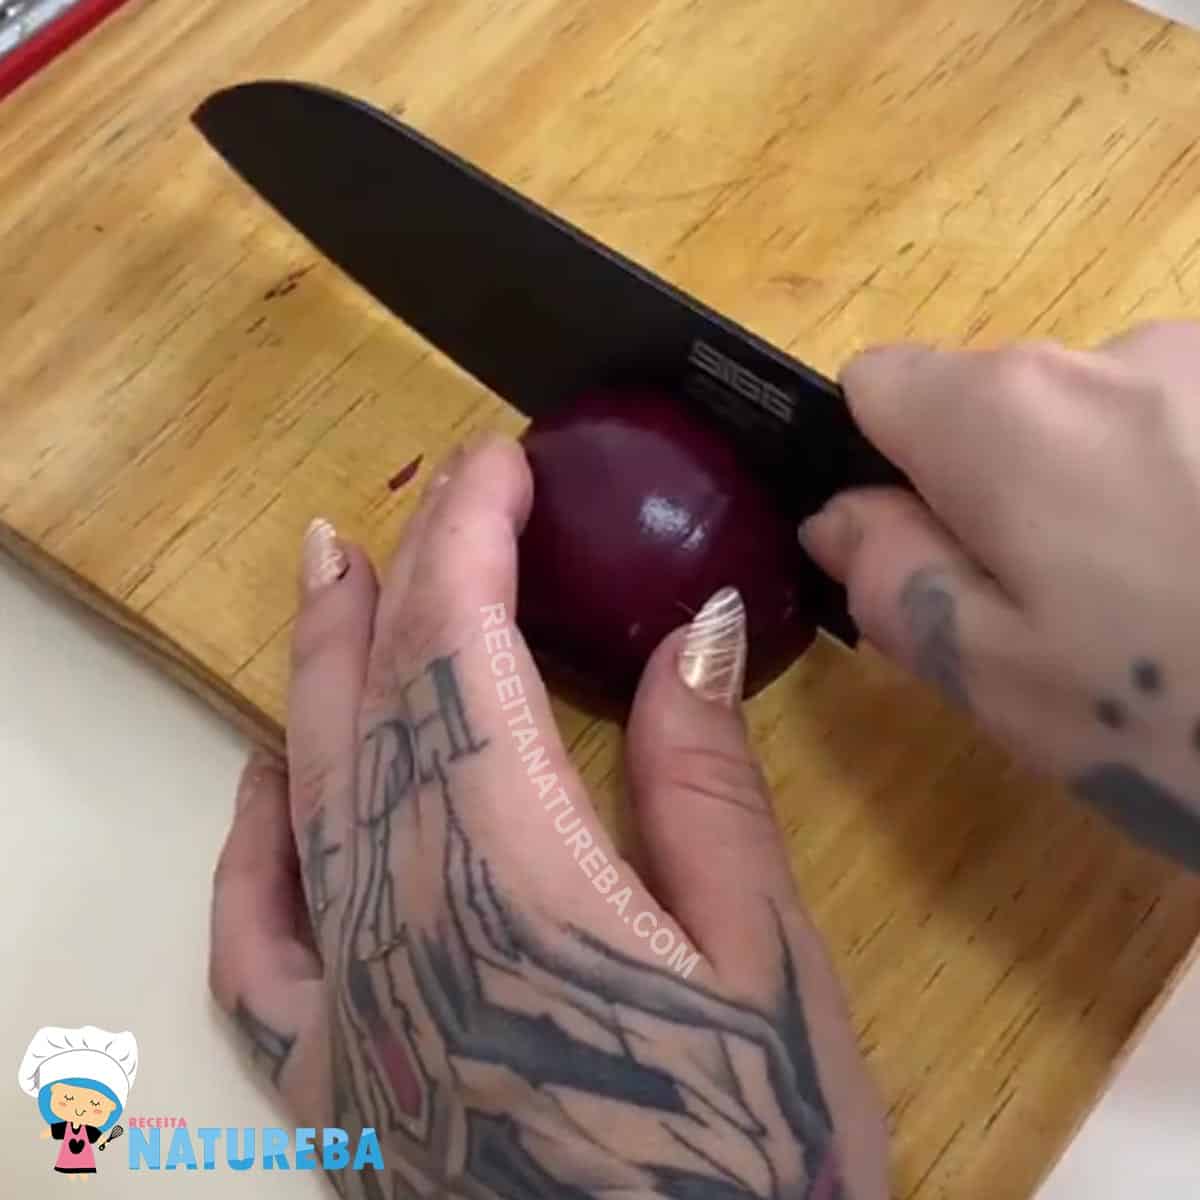 cortando cebola para file de tilapia